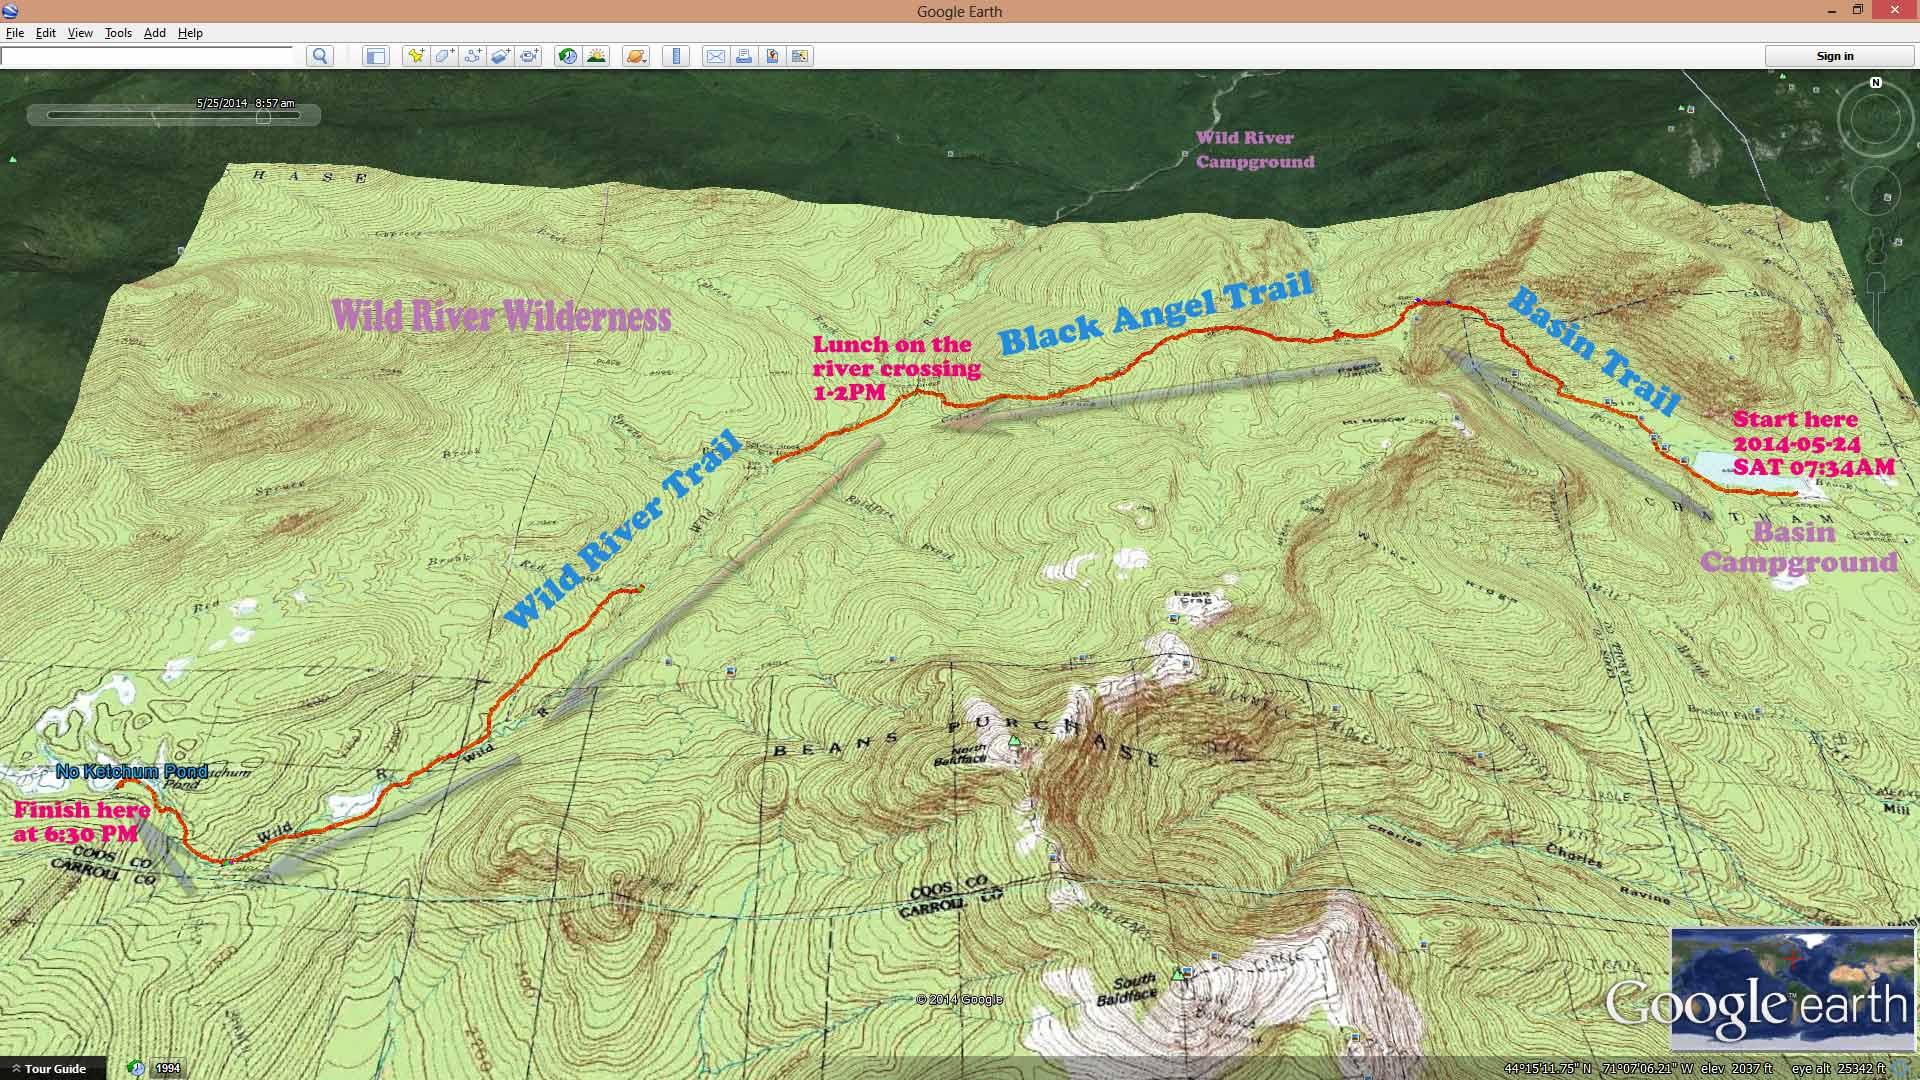 2014-05-24 SA 07AM-6PM Hike Overview